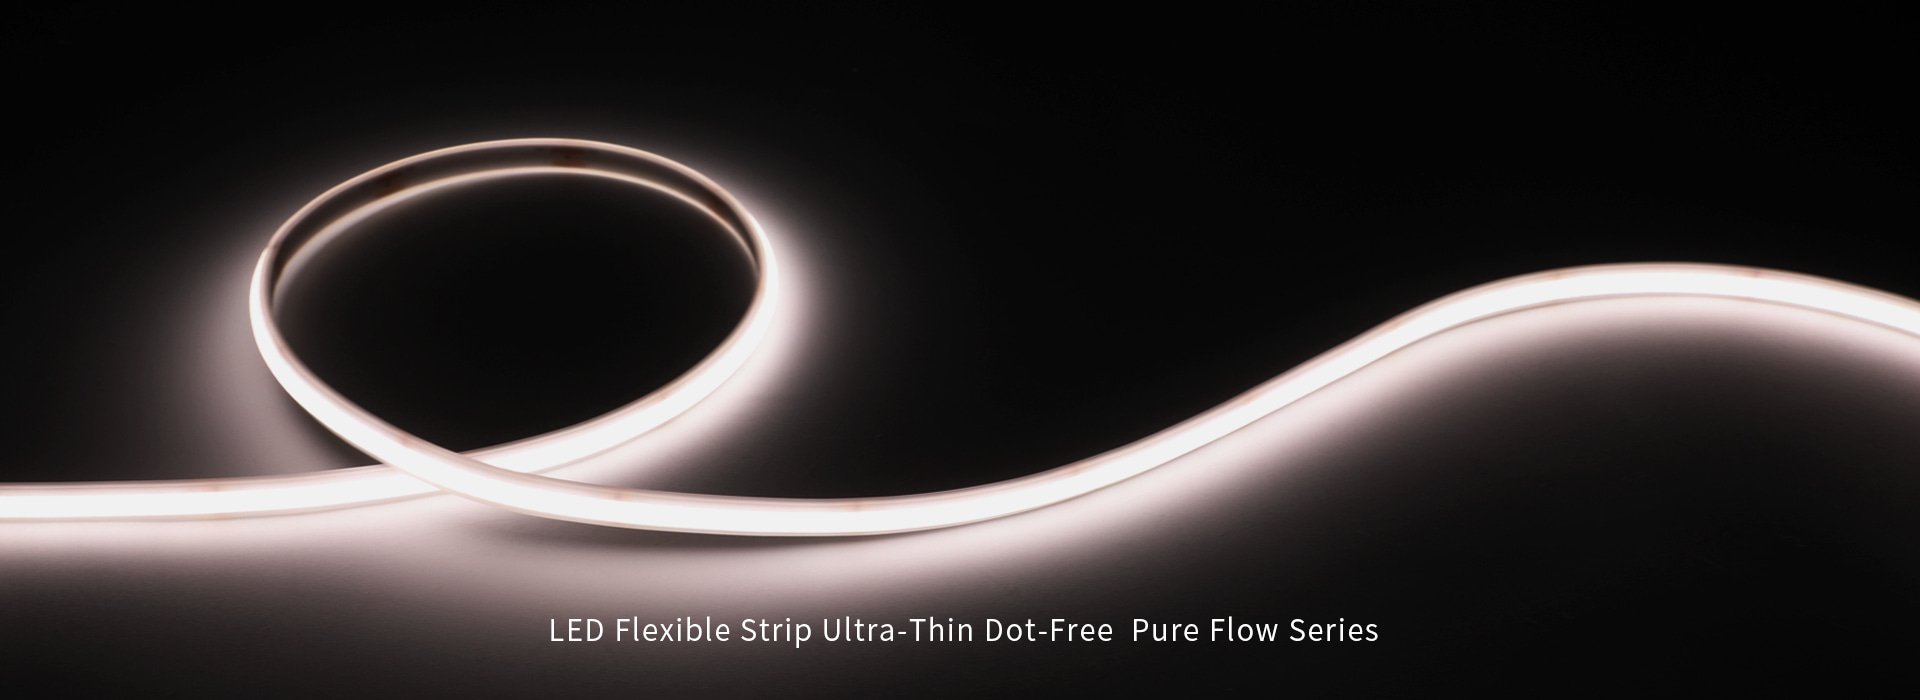 LED Flexible Strip Pure Flow Series Ultra-Thin Dot-Free